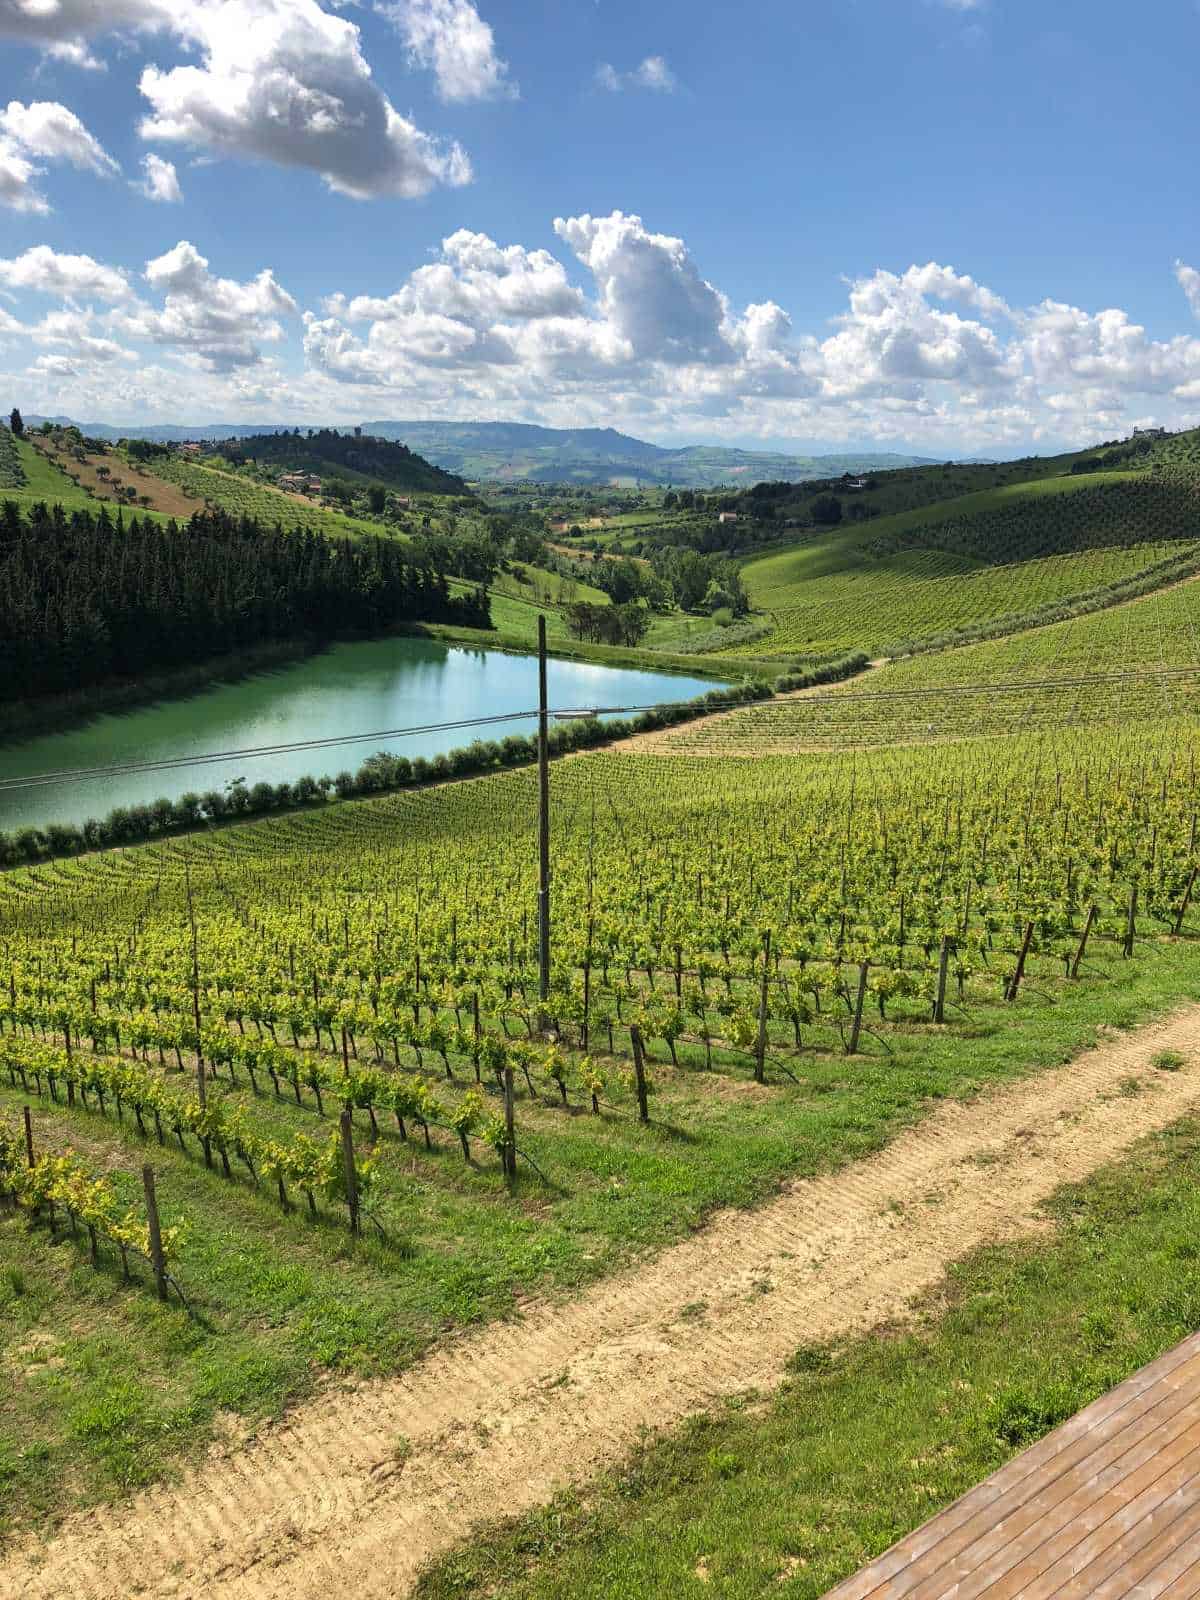 view at Nicodemi winery in Abruzzo, Italy.